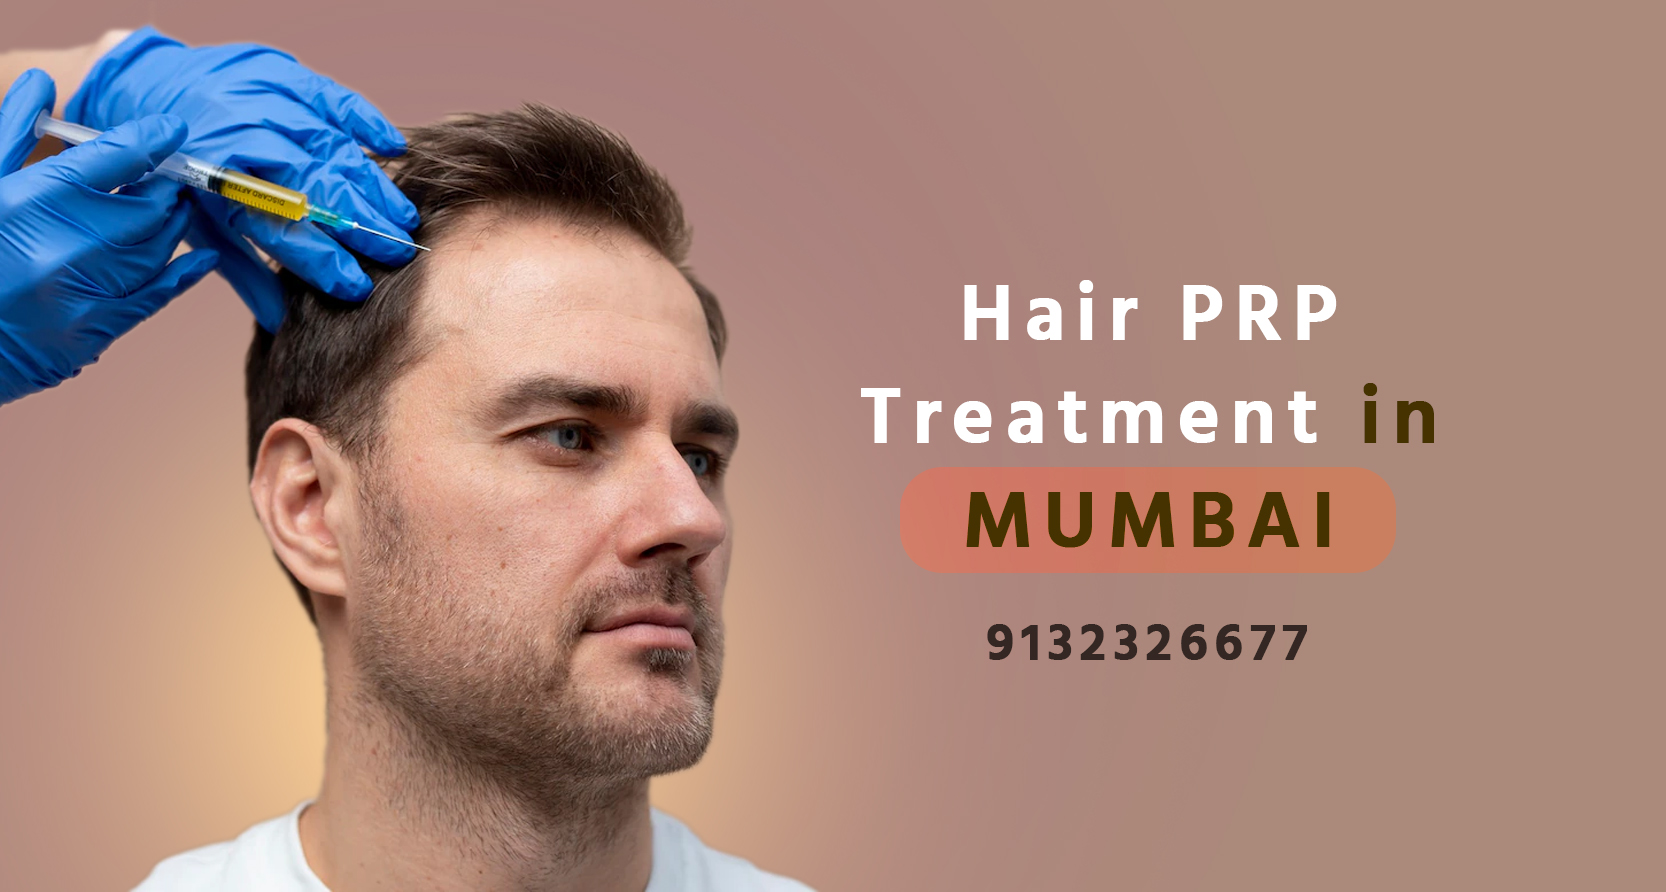 Best Hair PRP Treatment in Mumbai & Price - The Pinnk Door